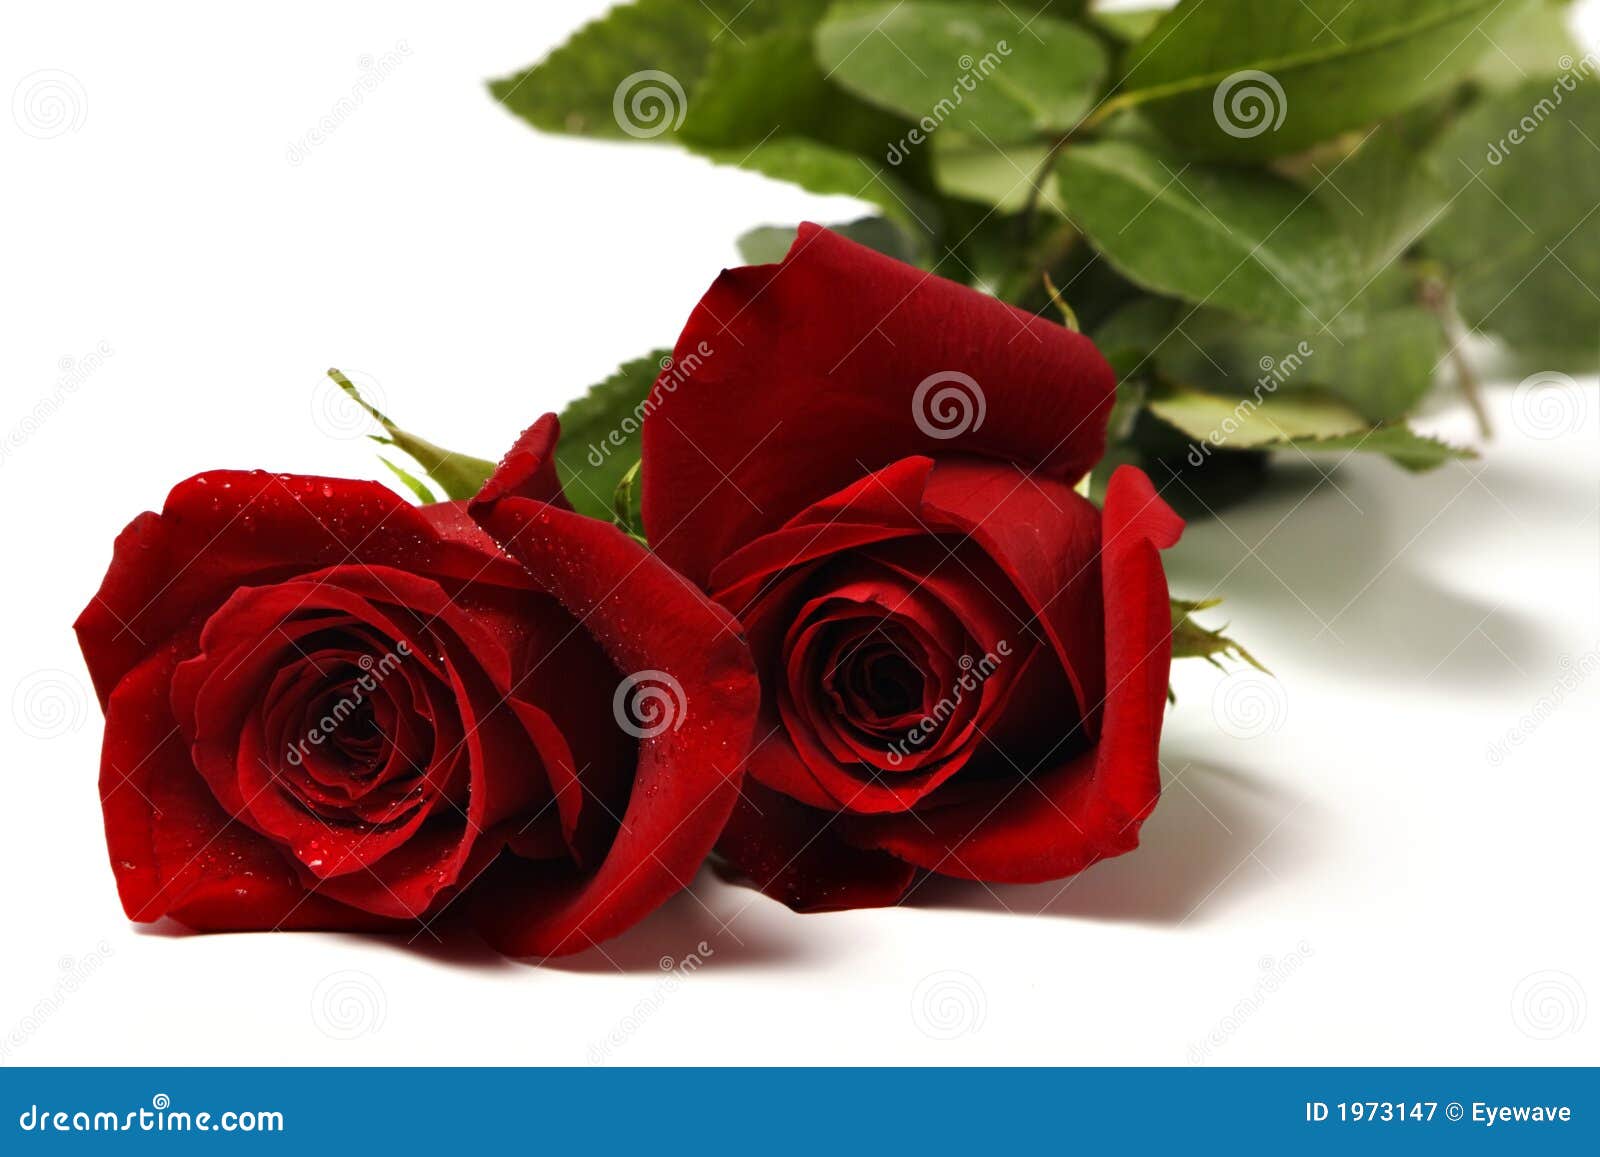 clipart rose rosse - photo #37